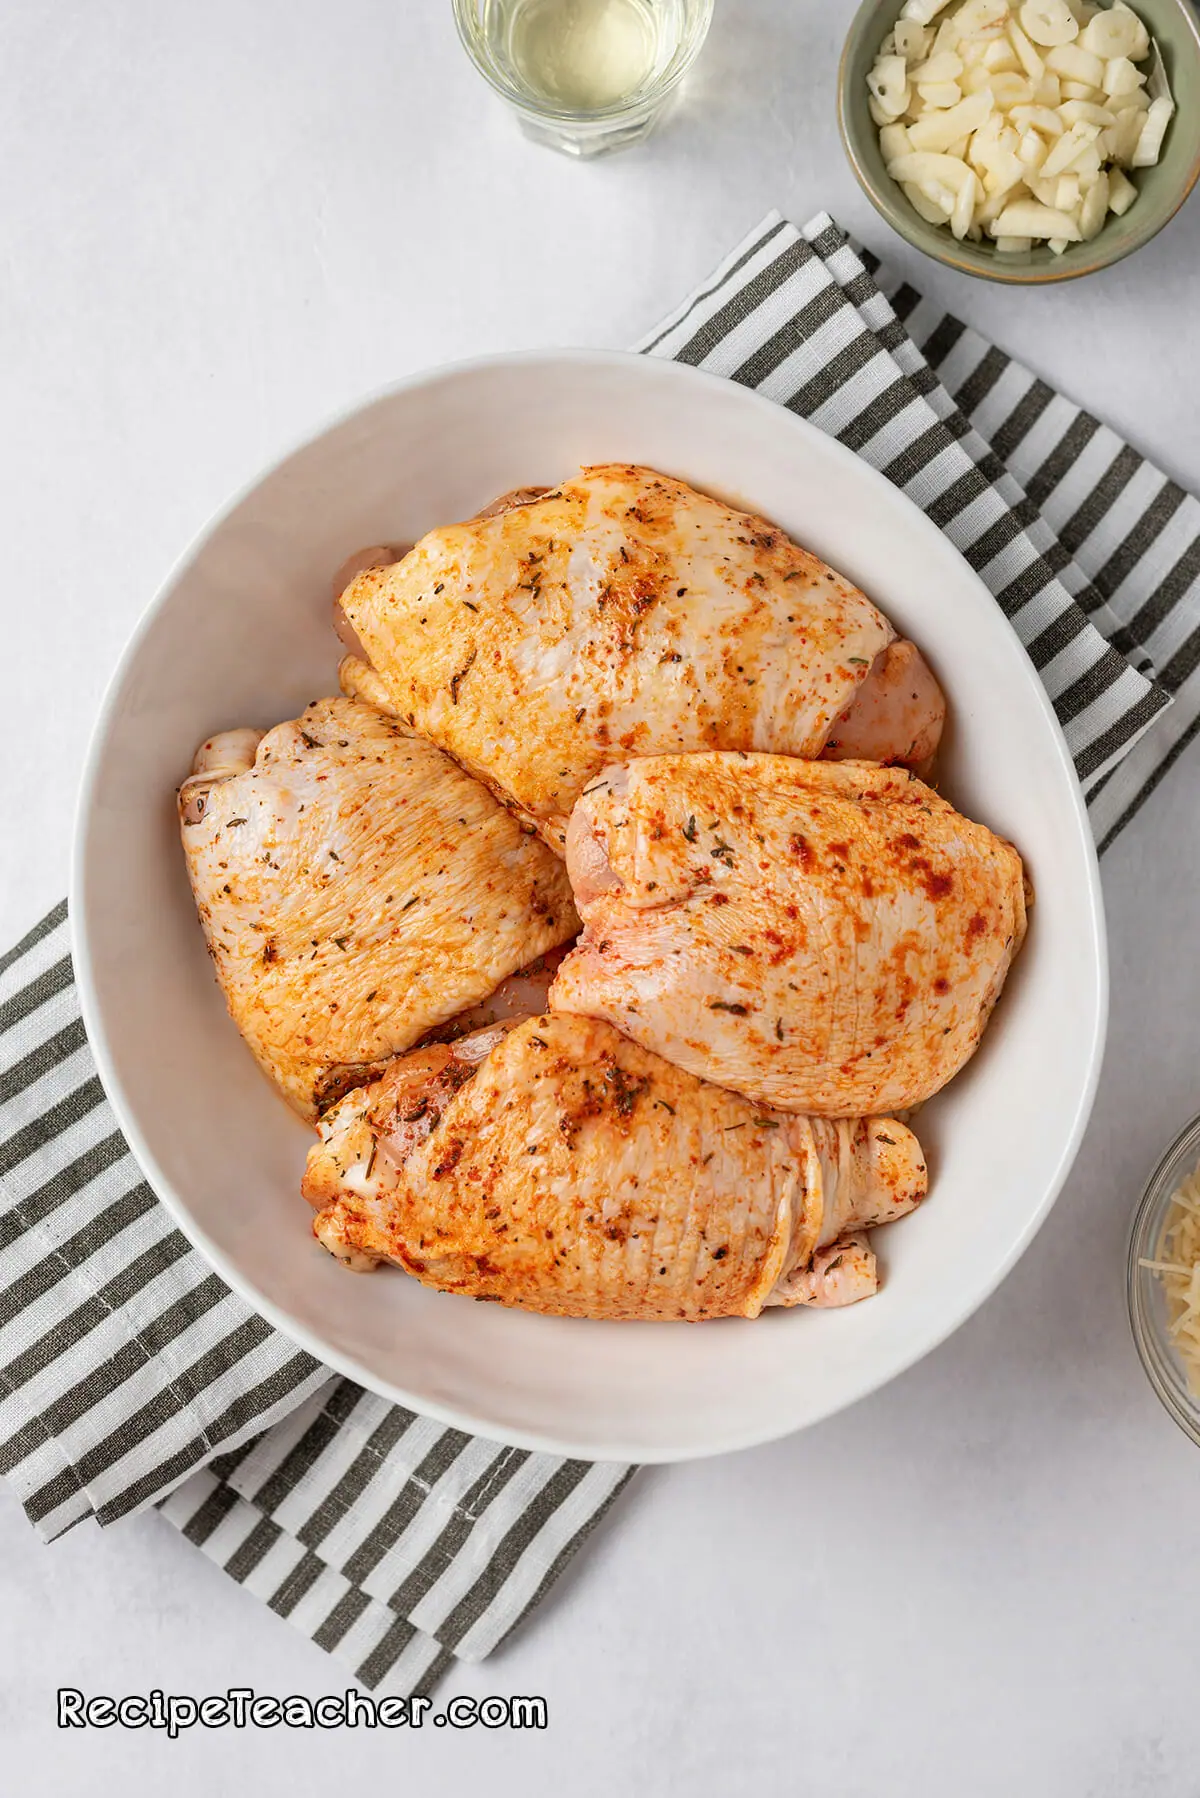 Recipe for Instant Pot creamy garlic chicken thighs.